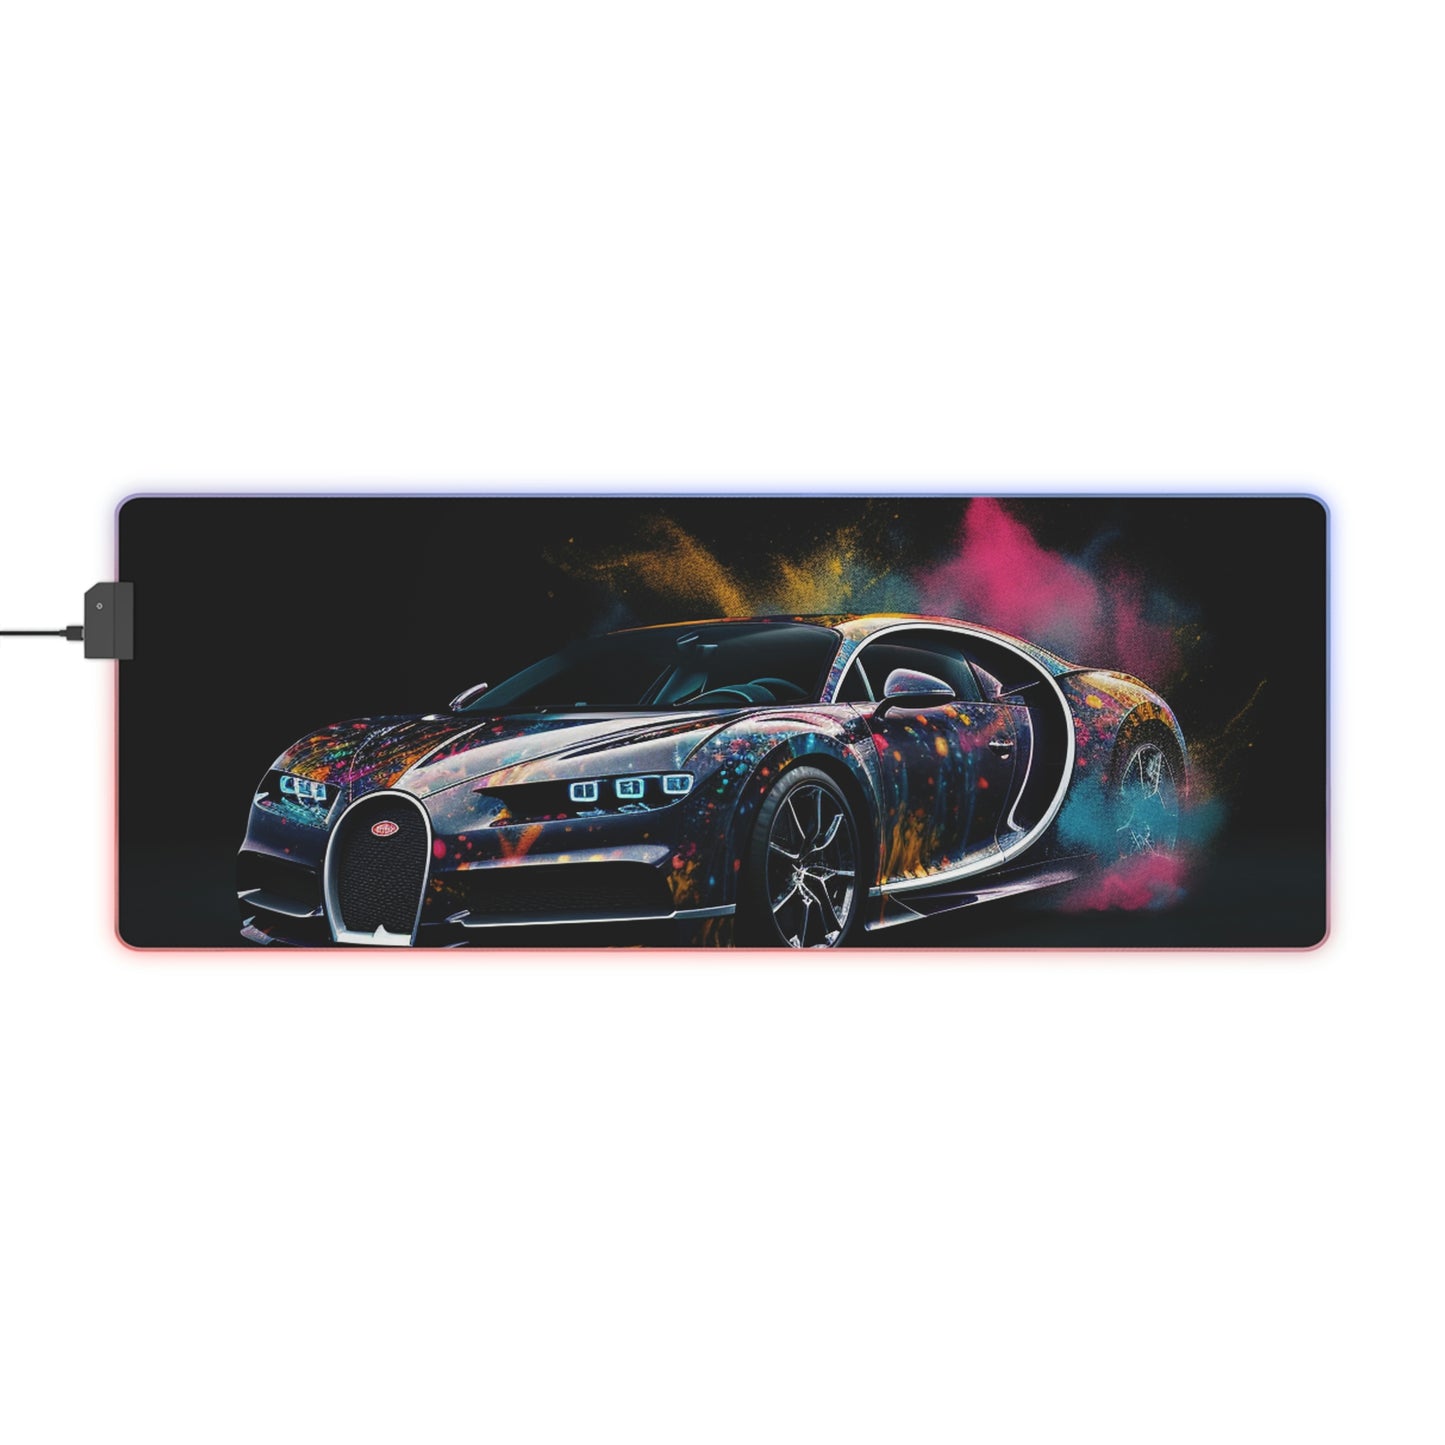 LED Gaming Mouse Pad Hyper Bugatti 4